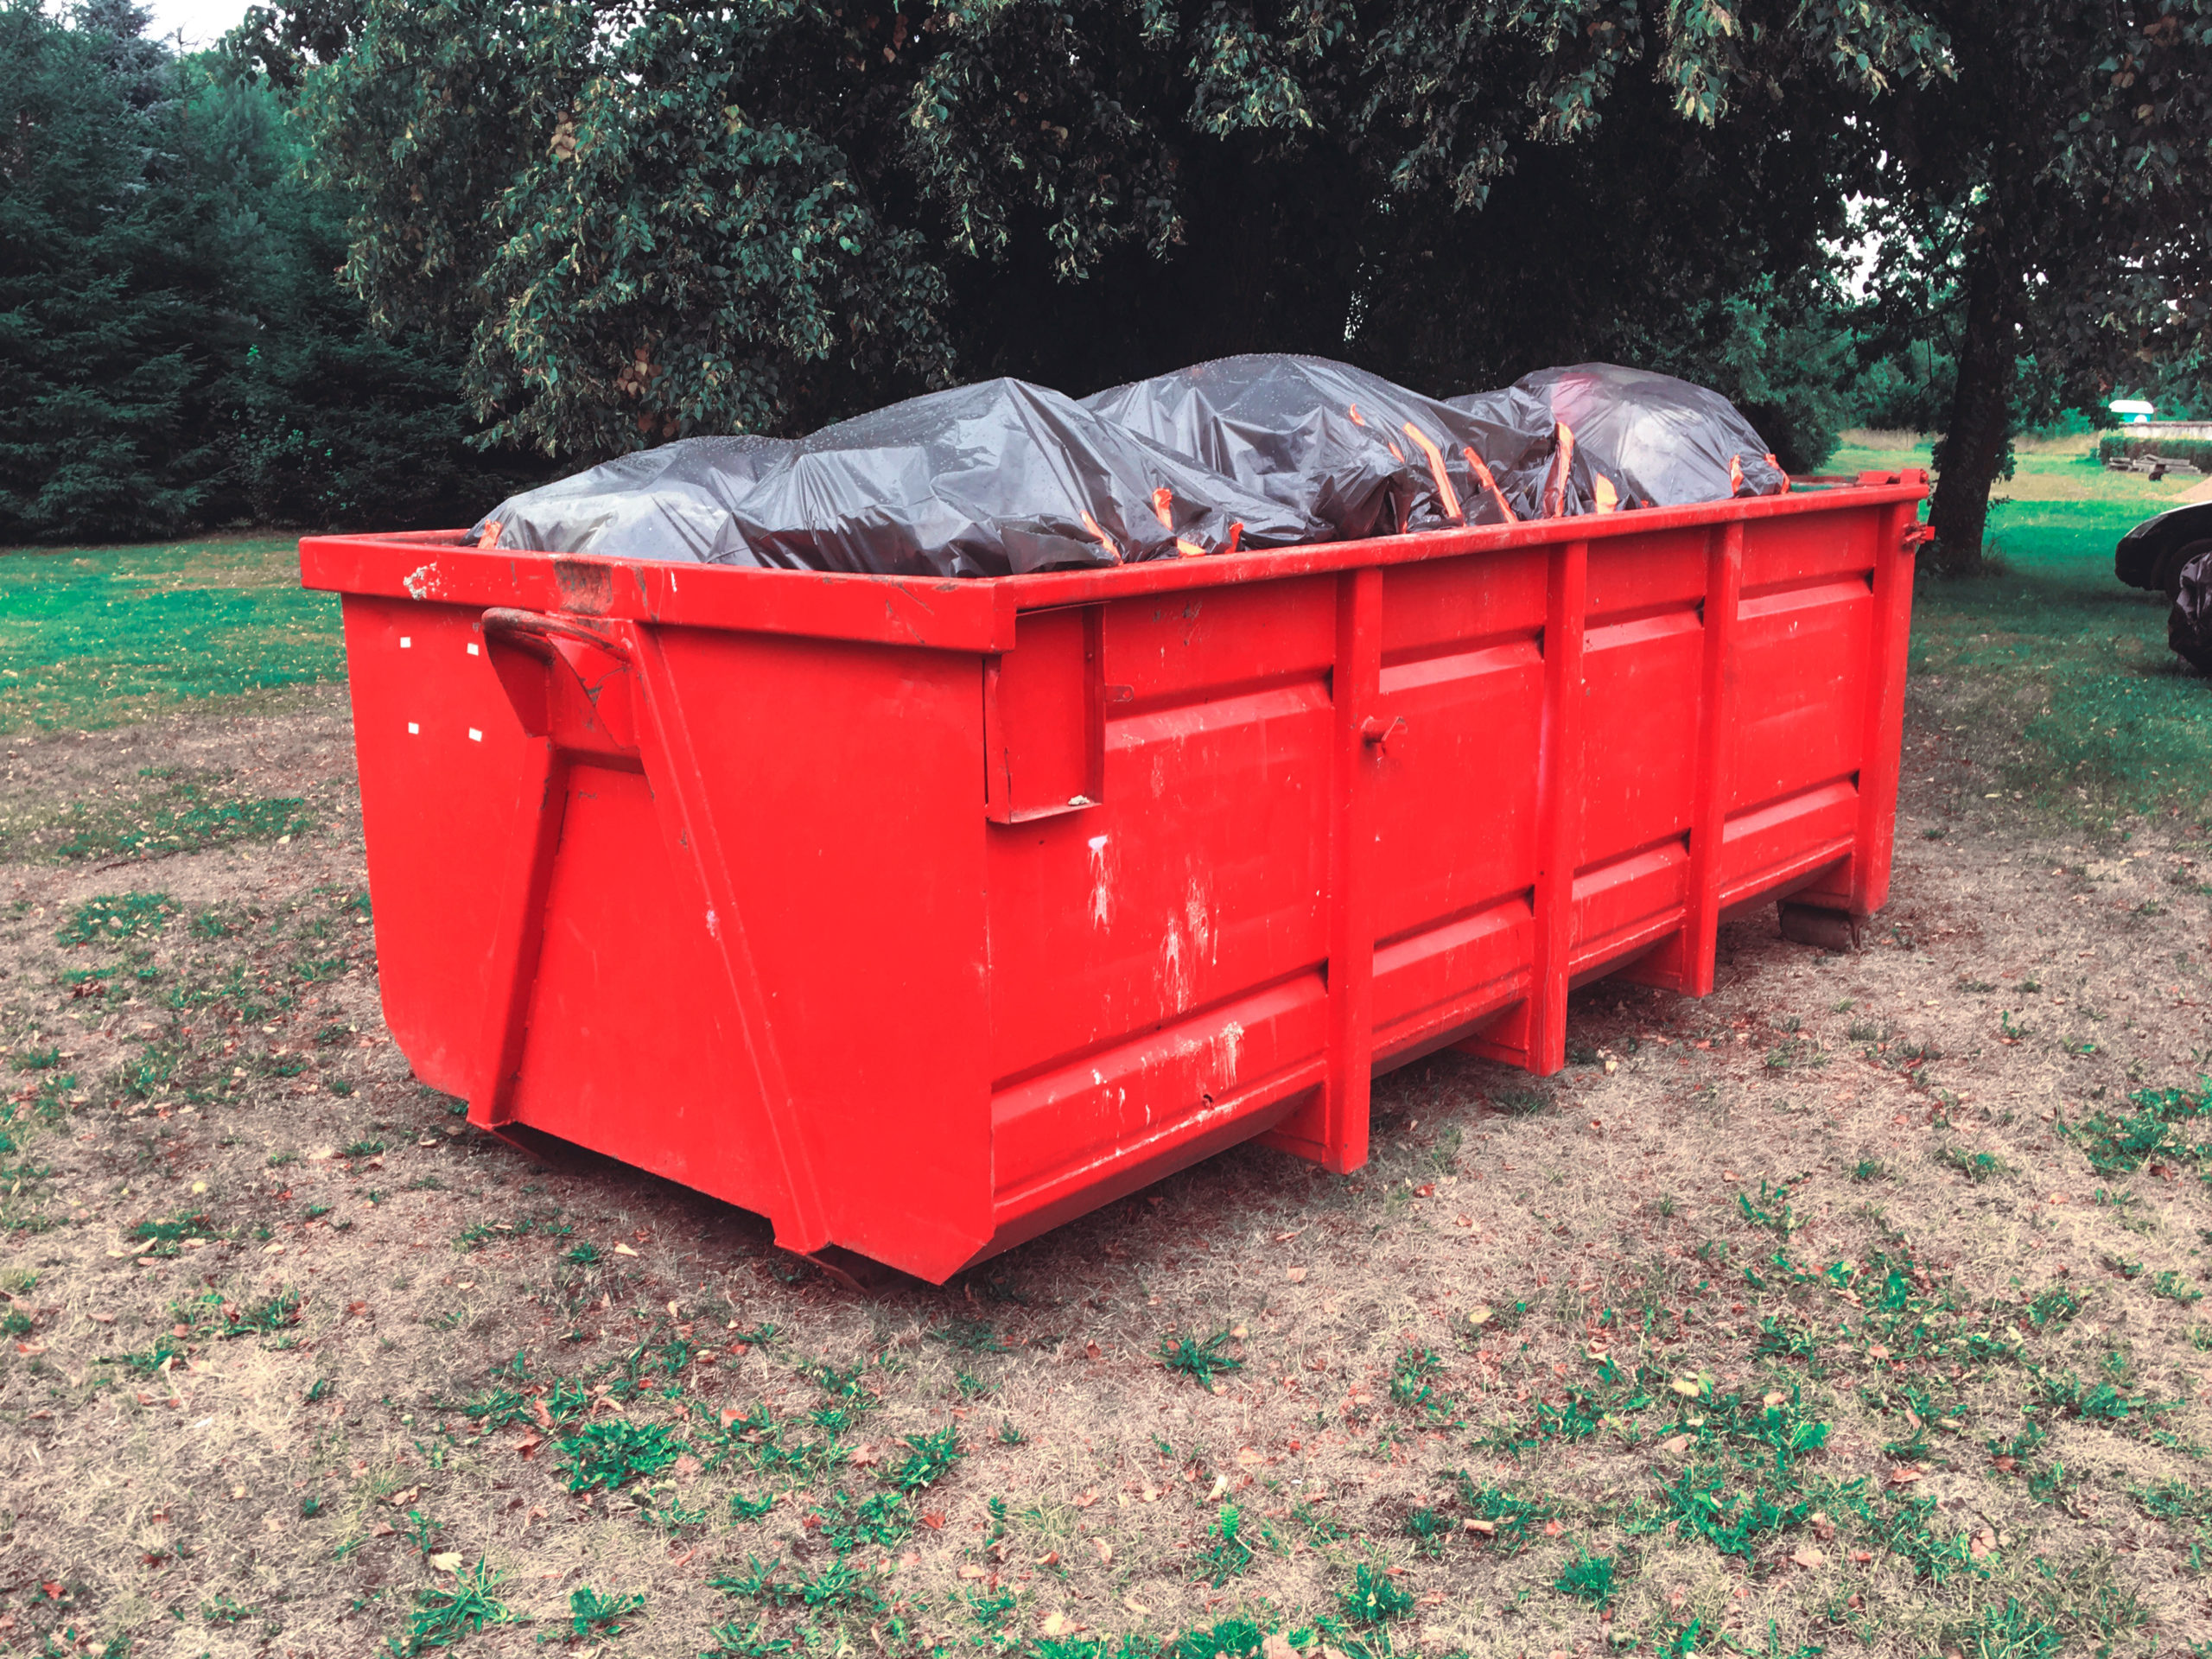 Dumpster Rentals In Houston & Texas